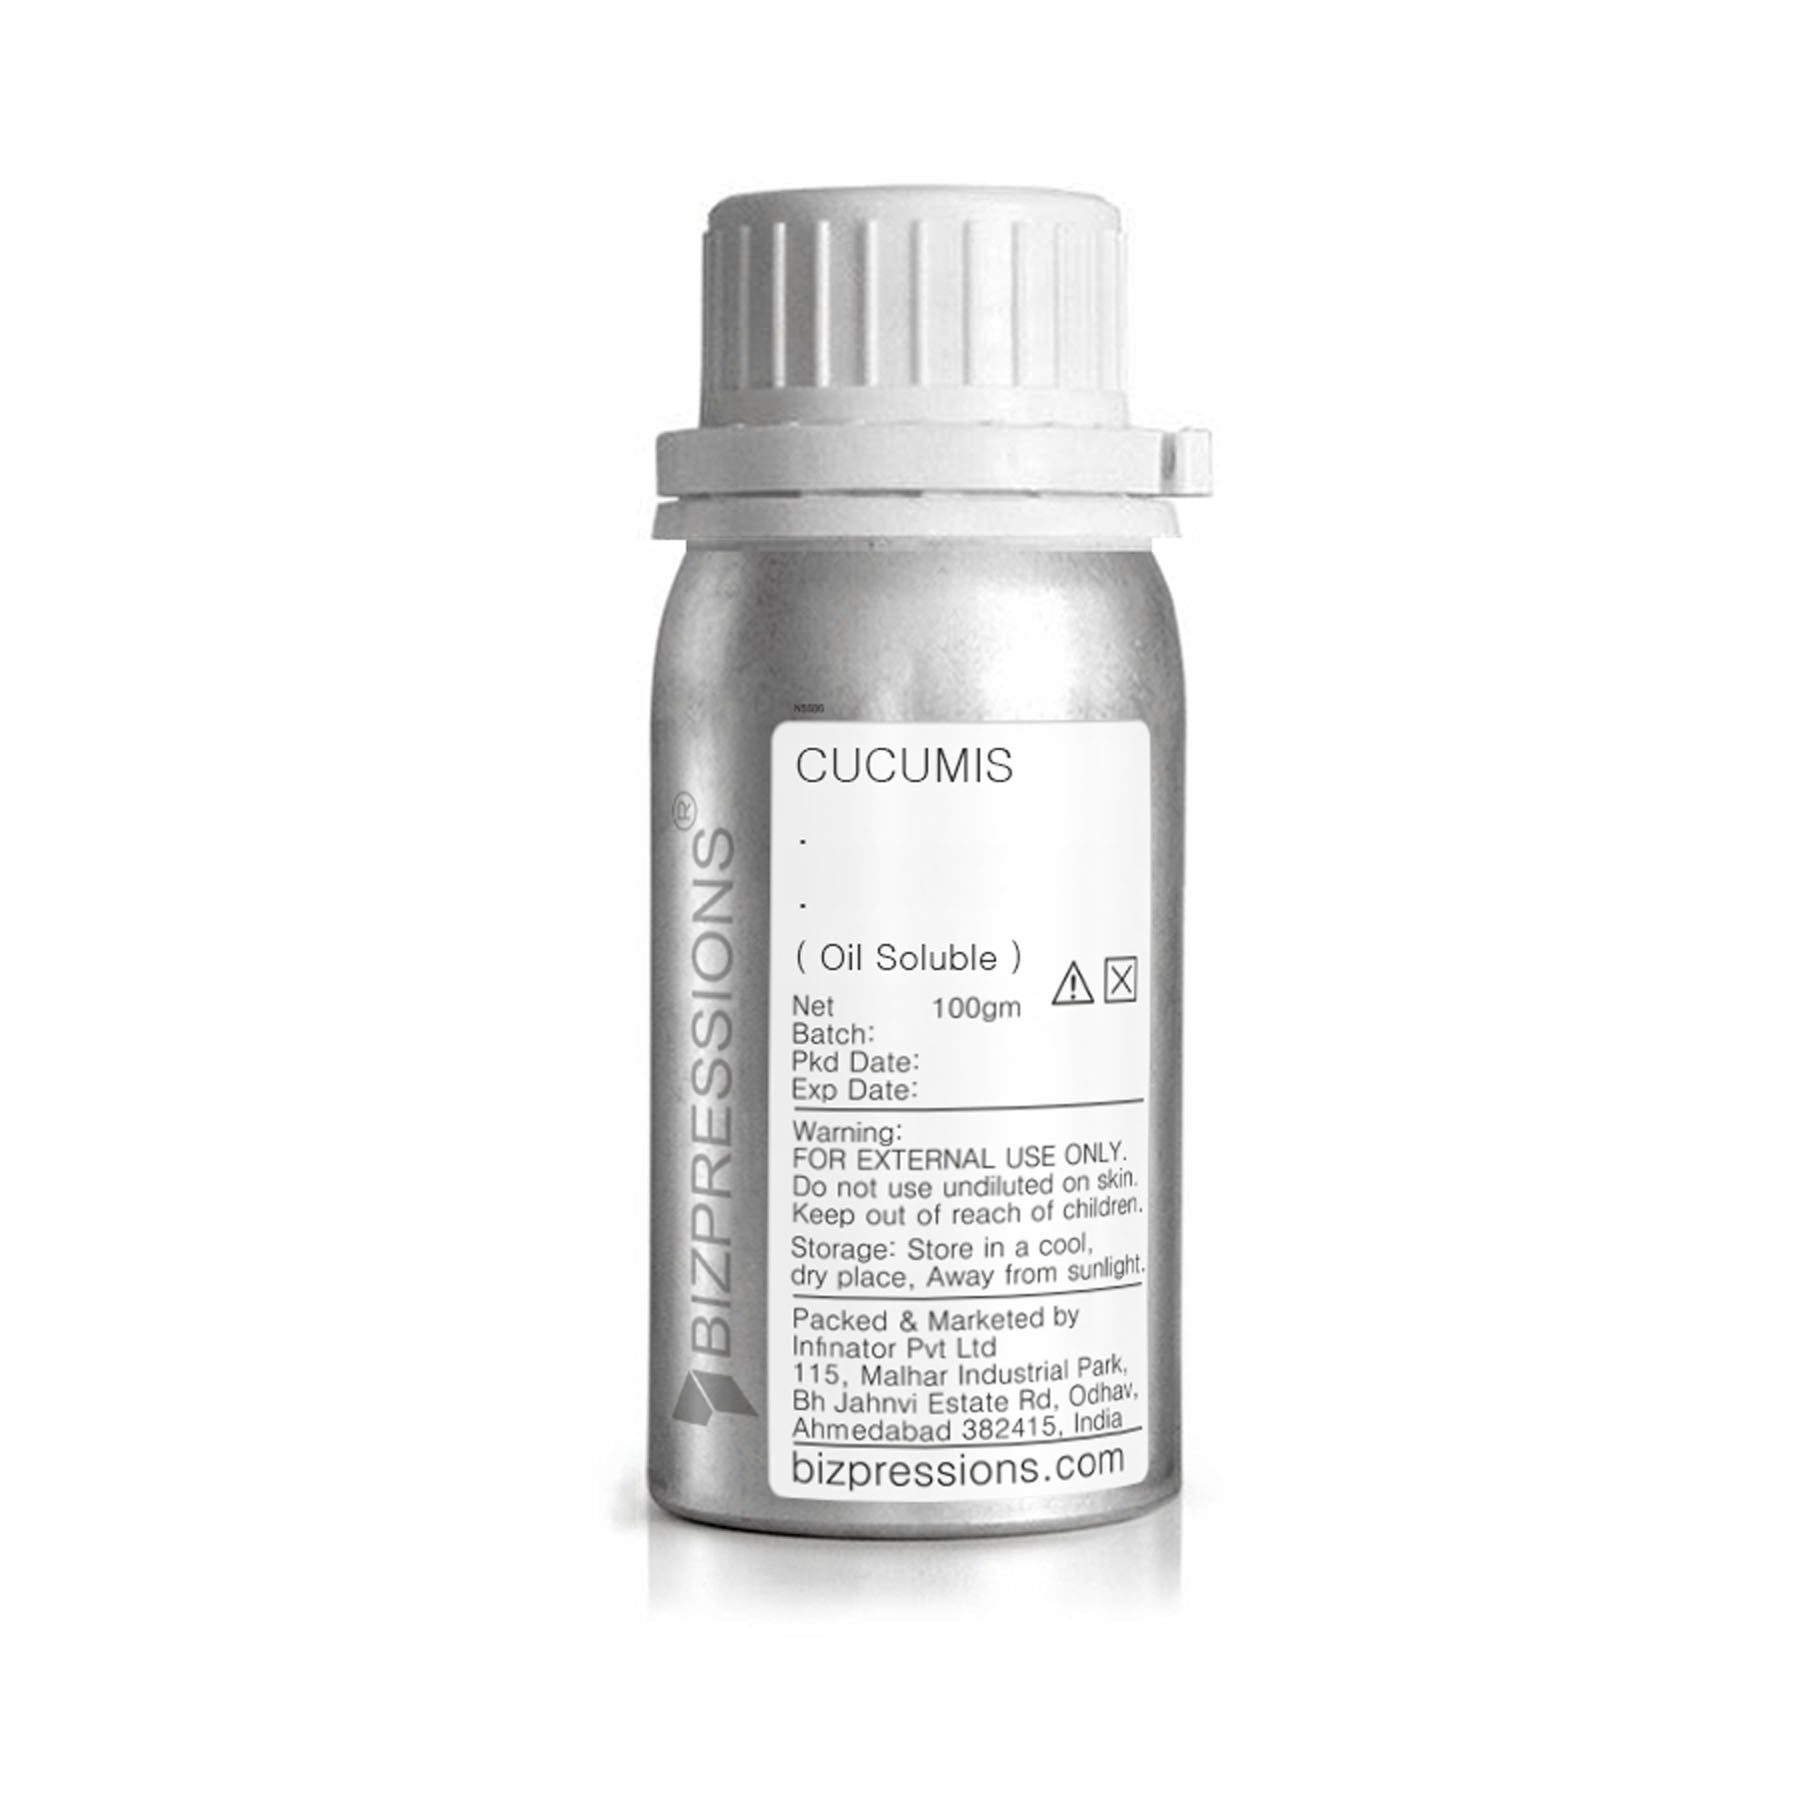 CUCUMIS - Fragrance ( Oil Soluble ) - 100 gm